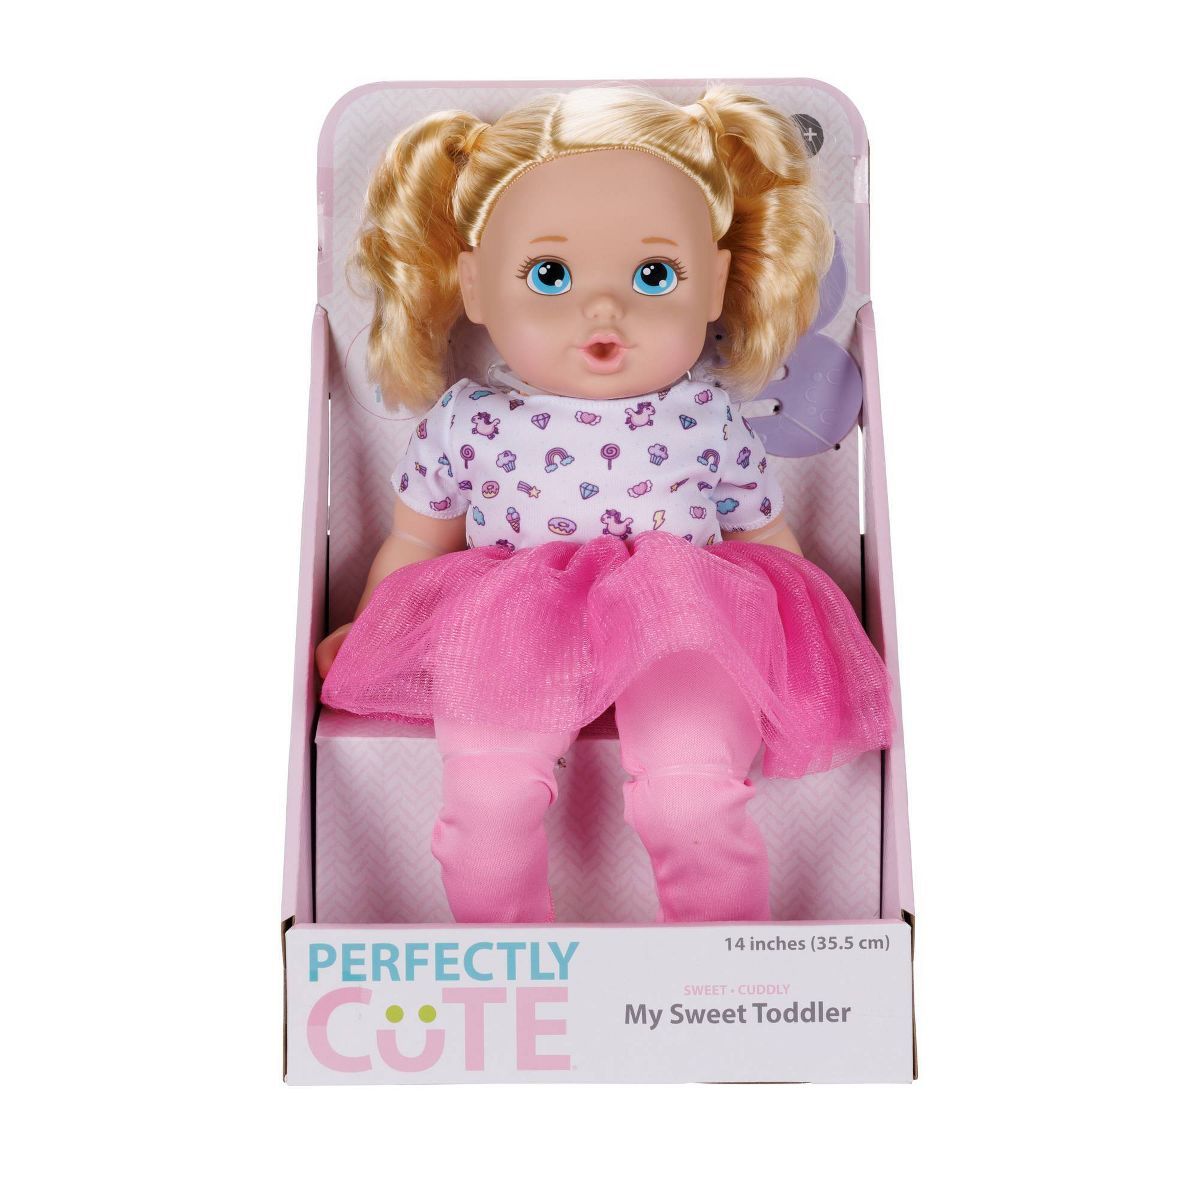 Perfectly Cute My Sweet Toddler Baby Doll - Blonde Hair/Blue Eyes | Target